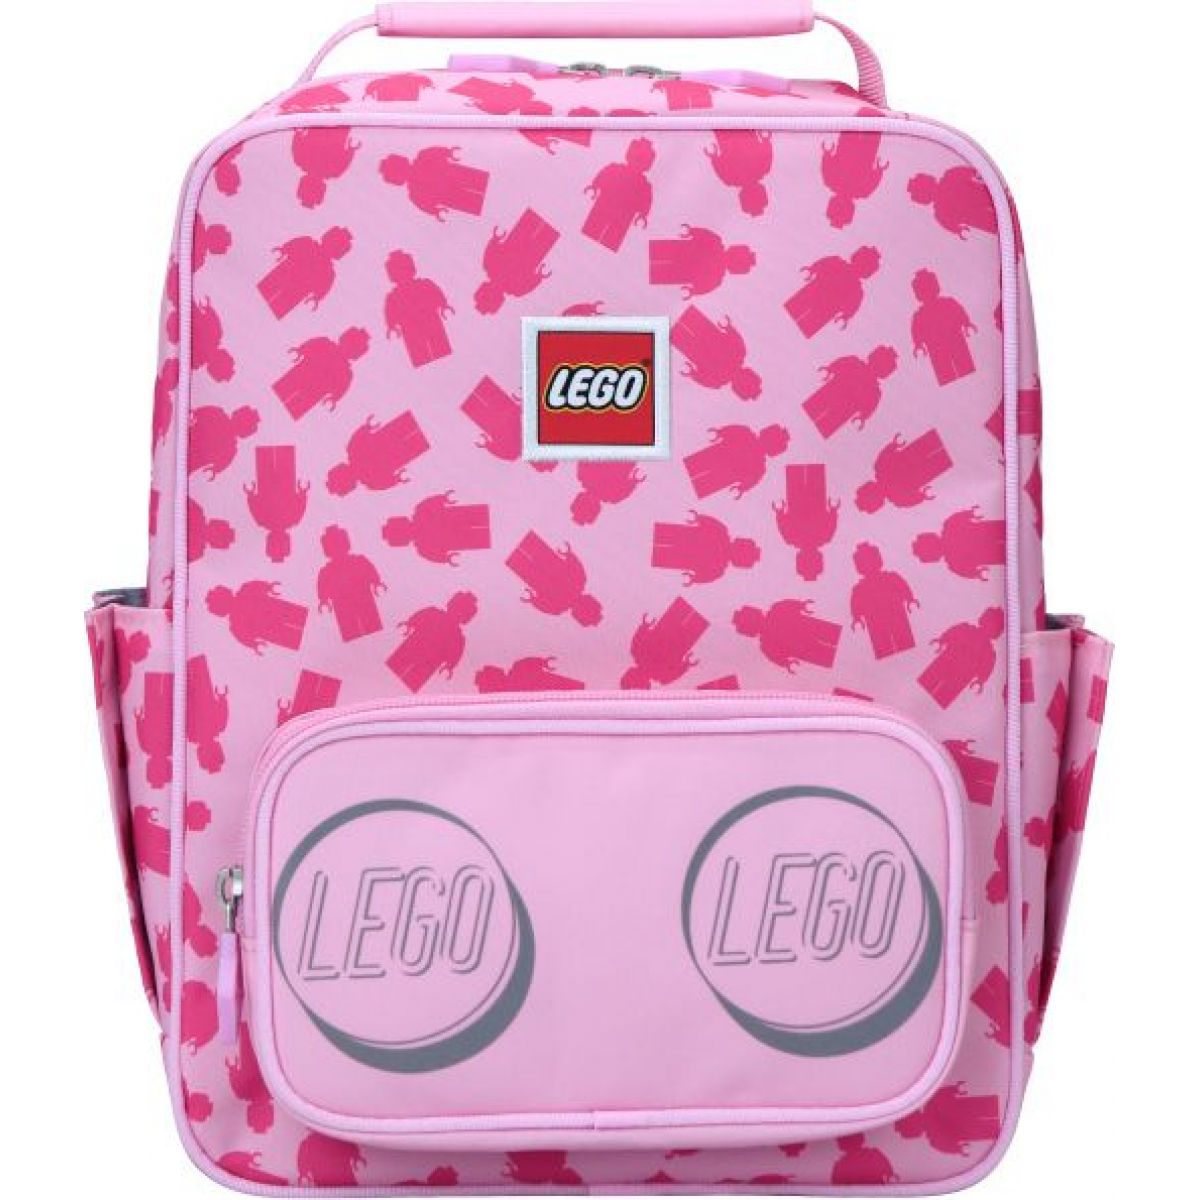 LEGO Tribini CLASSIC batůžek - růžový